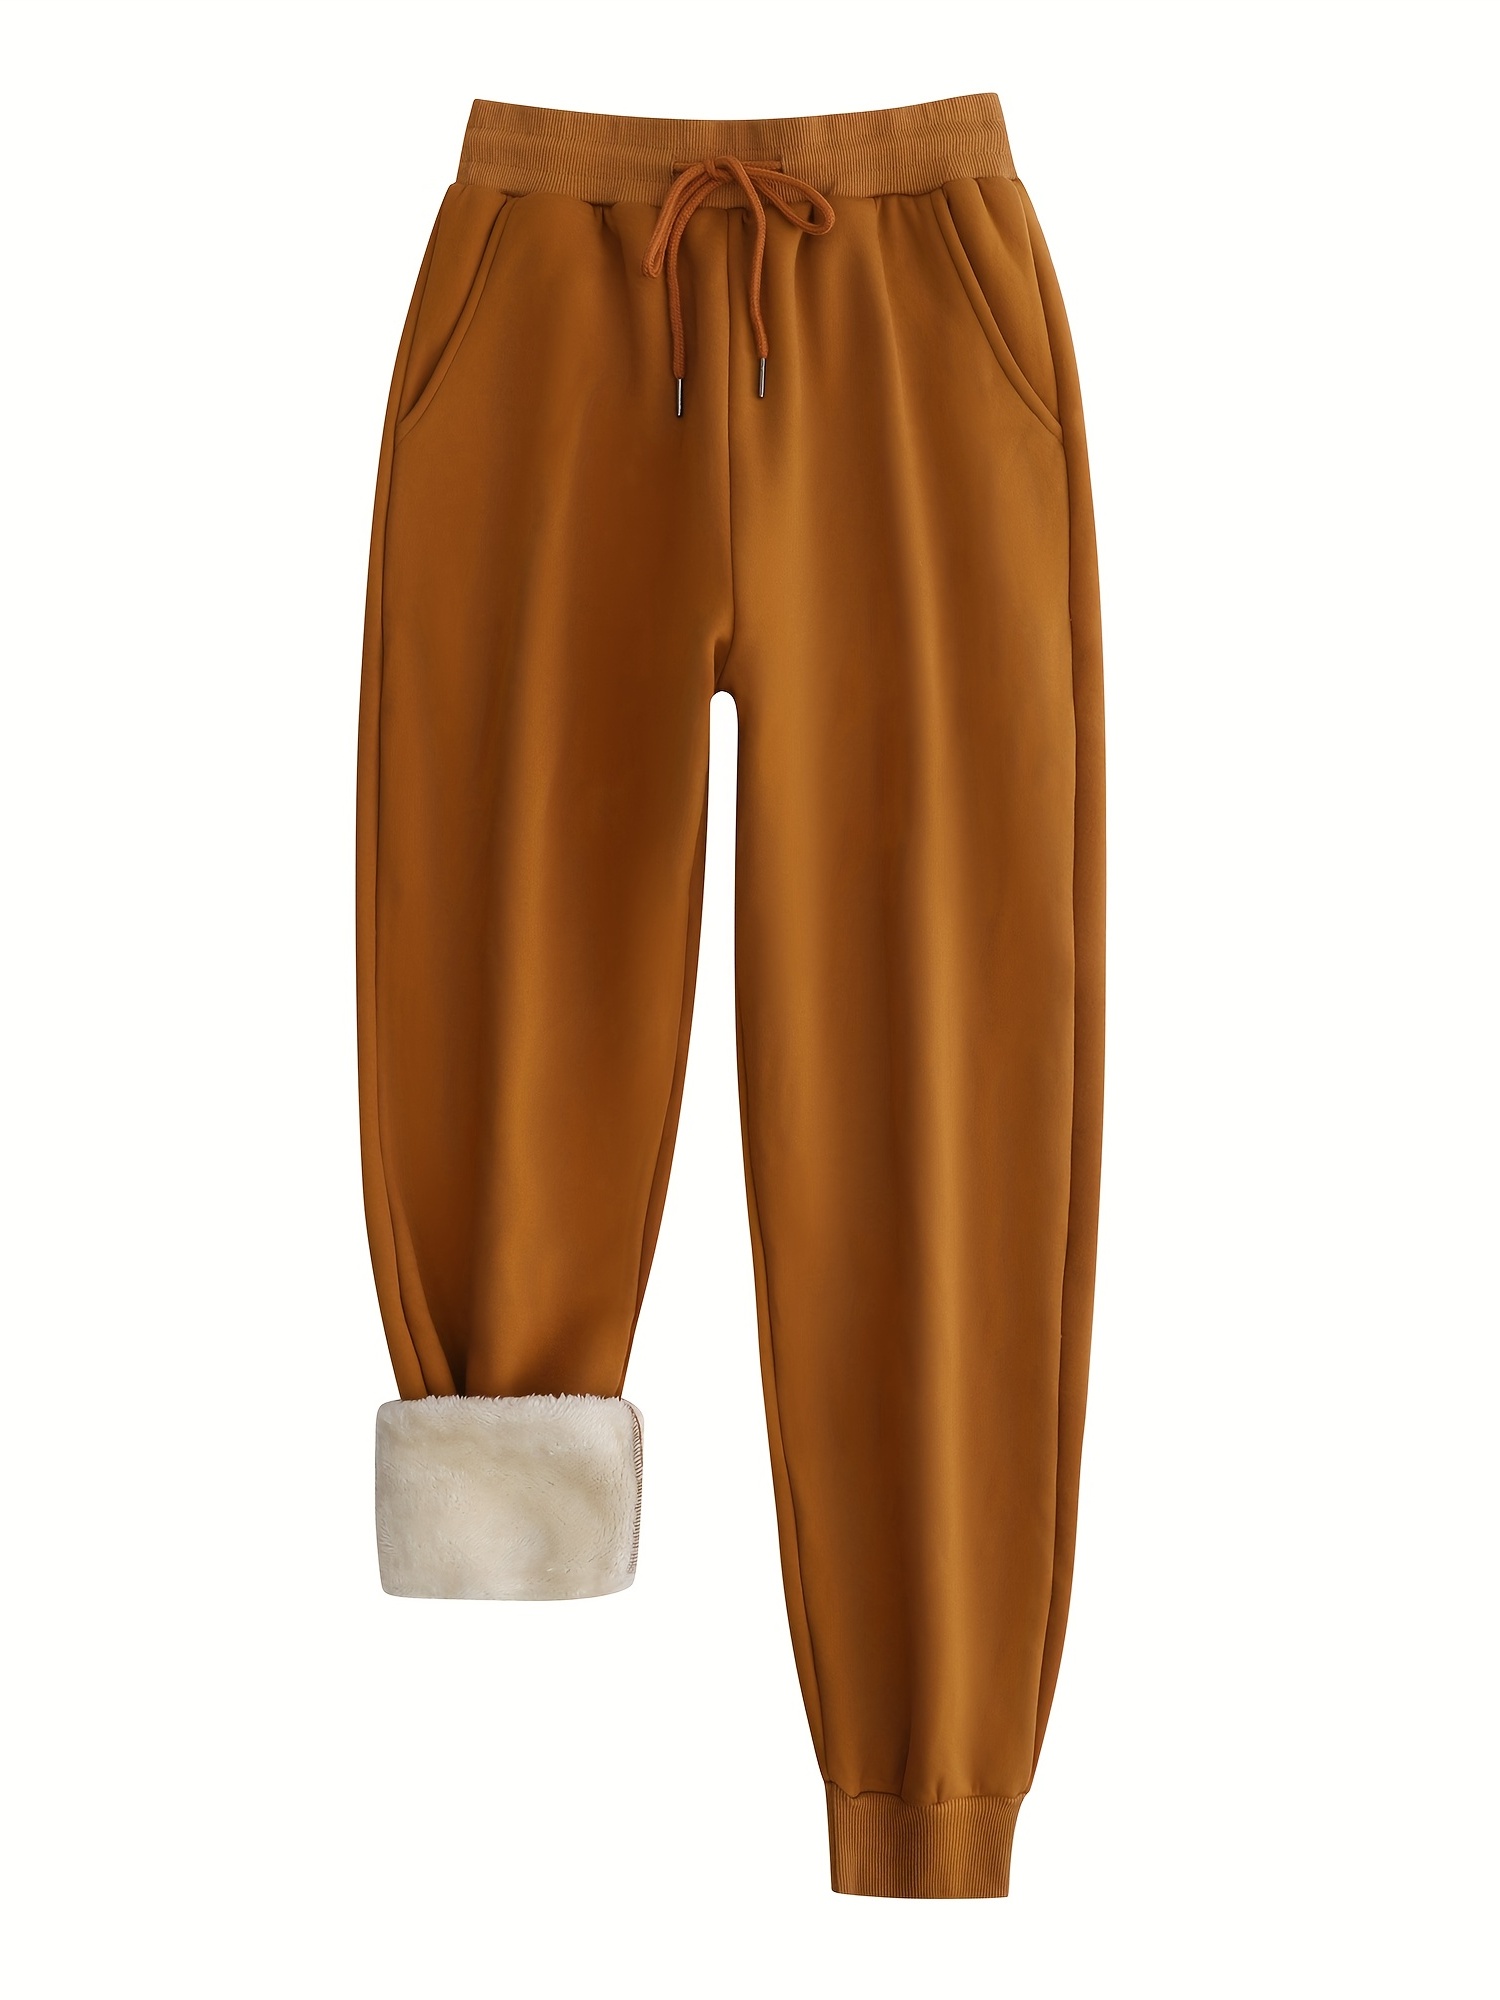 plush thermal pants, winter plush thermal pants casual drawstring pocket pants womens clothing details 12